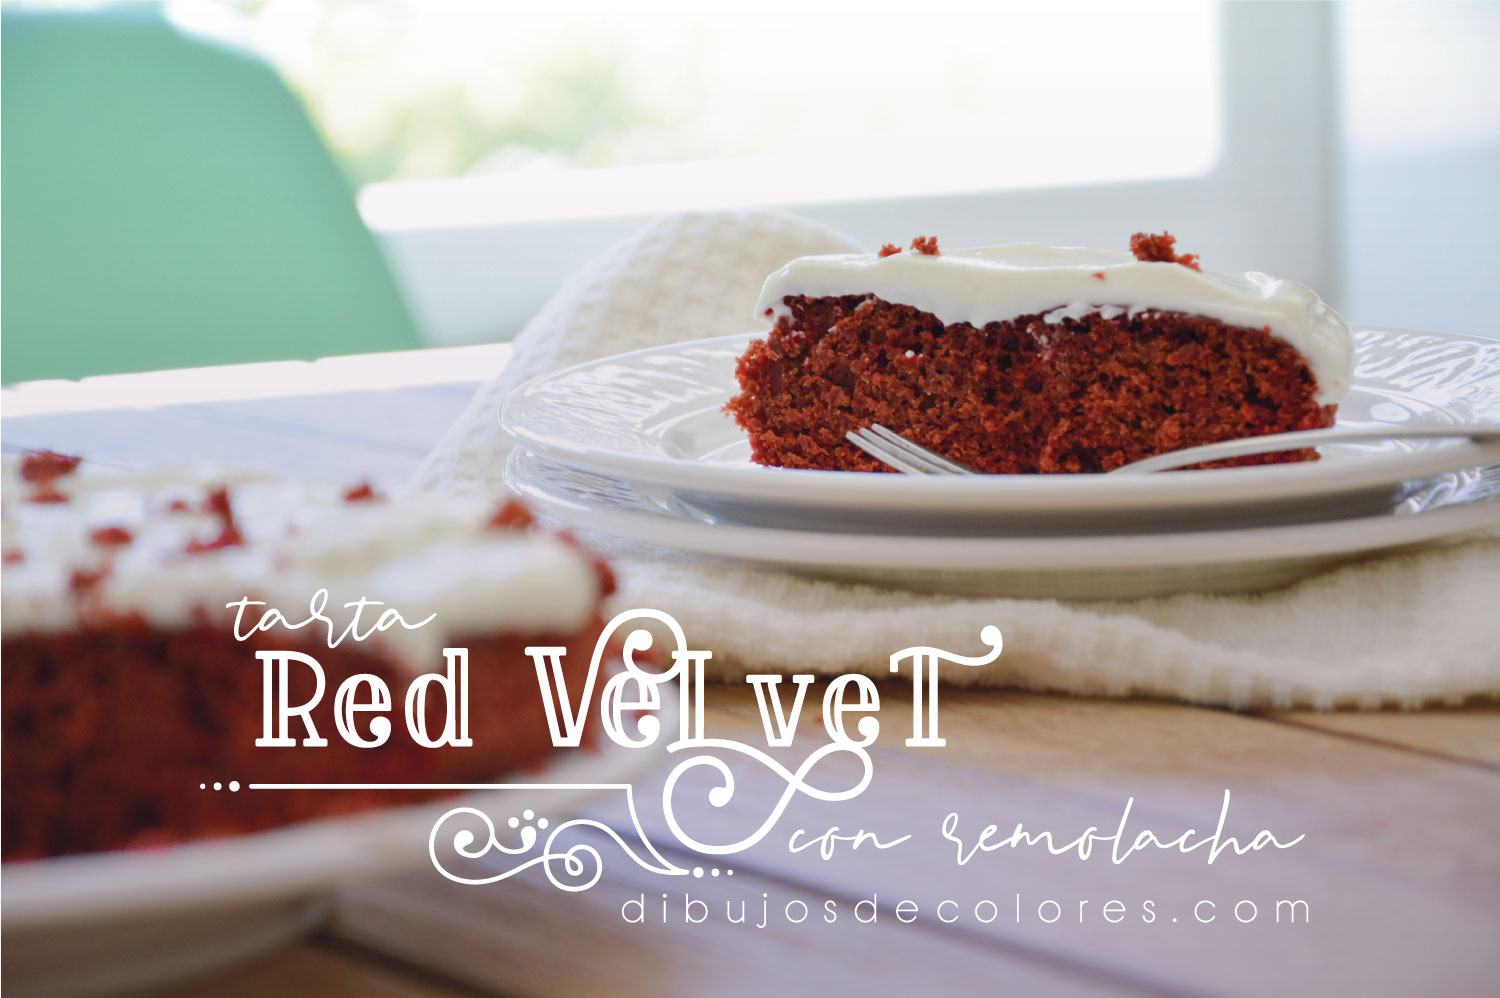 Postres Red Velvet, ¡con colorante natural de remolacha!